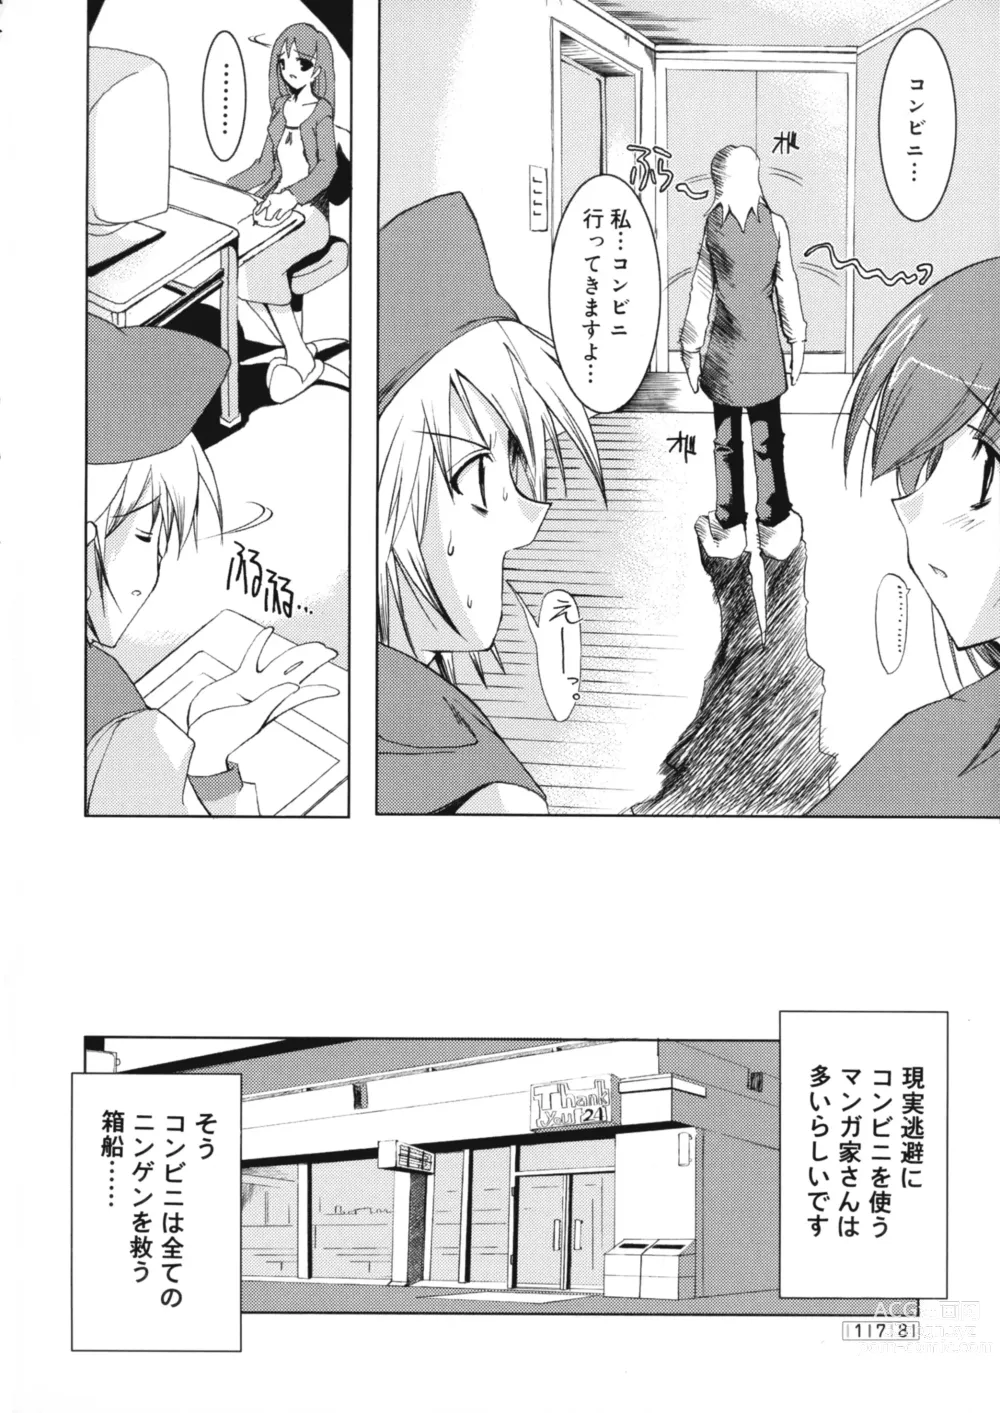 Page 168 of manga Hikikomori Kenkouhou